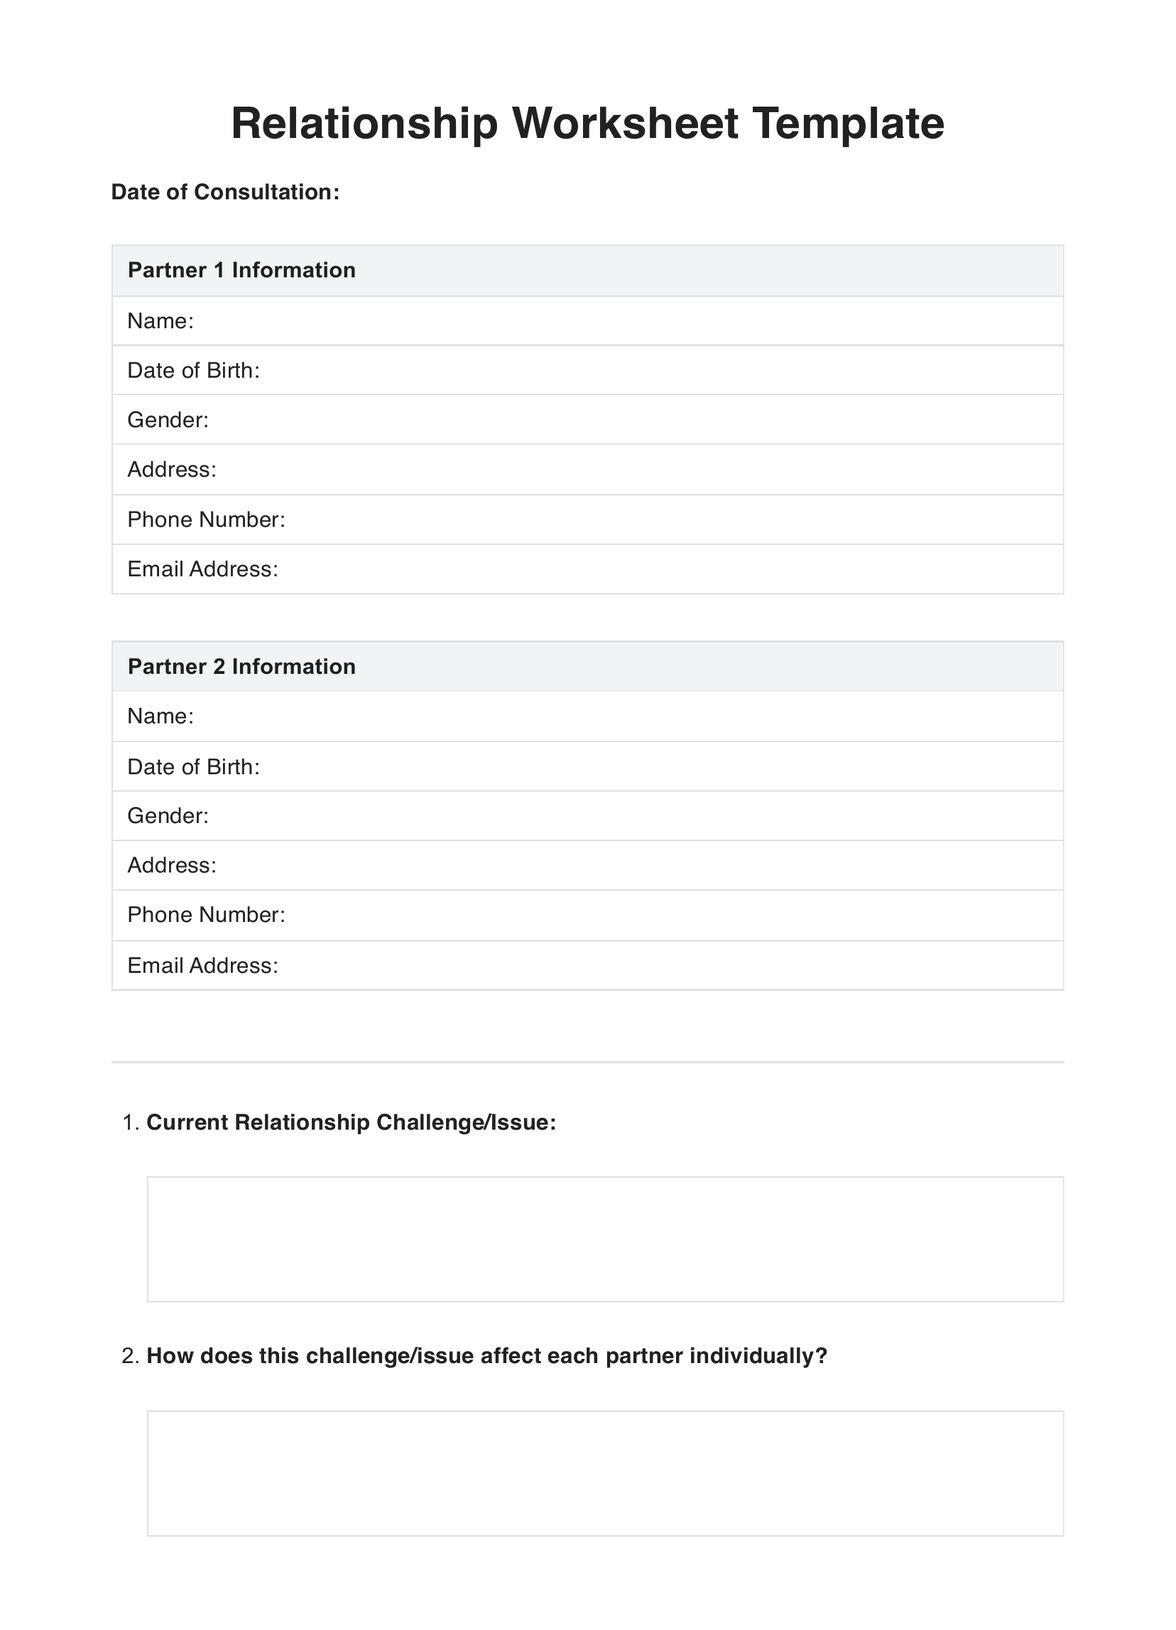 Relationship Worksheets PDF Example